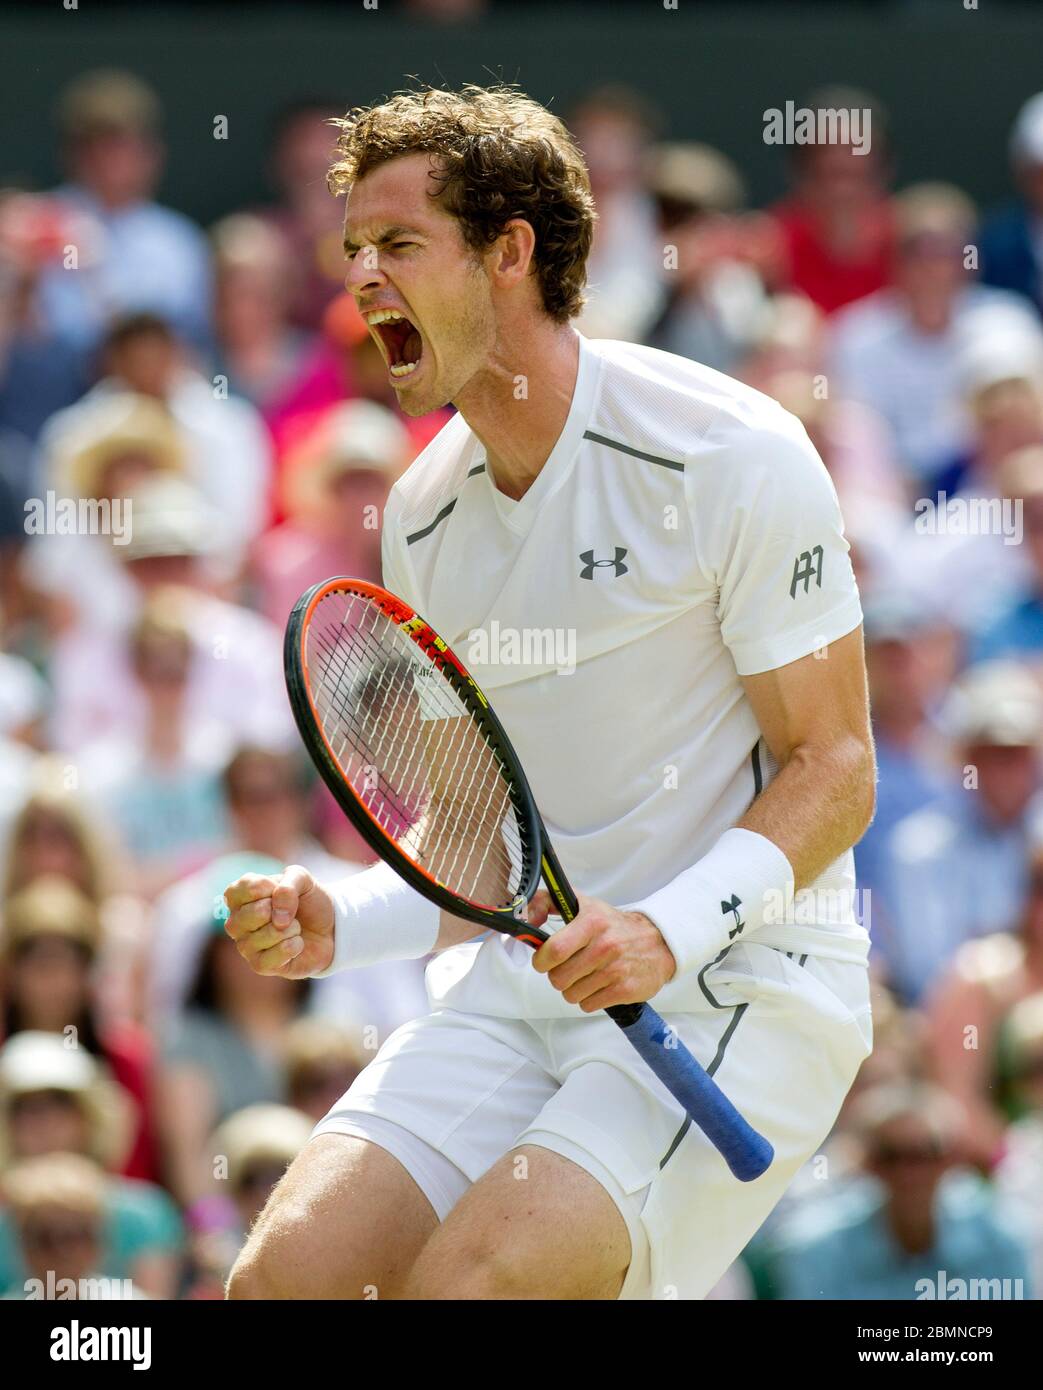 6 de julio de 2015, Campeonato de Wimbledon, Londres. Hombres solteros cuarta ronda, Center Court, Andy Murray (GBR) celebra contra Ivo Karlovic, (Cro) Foto de stock